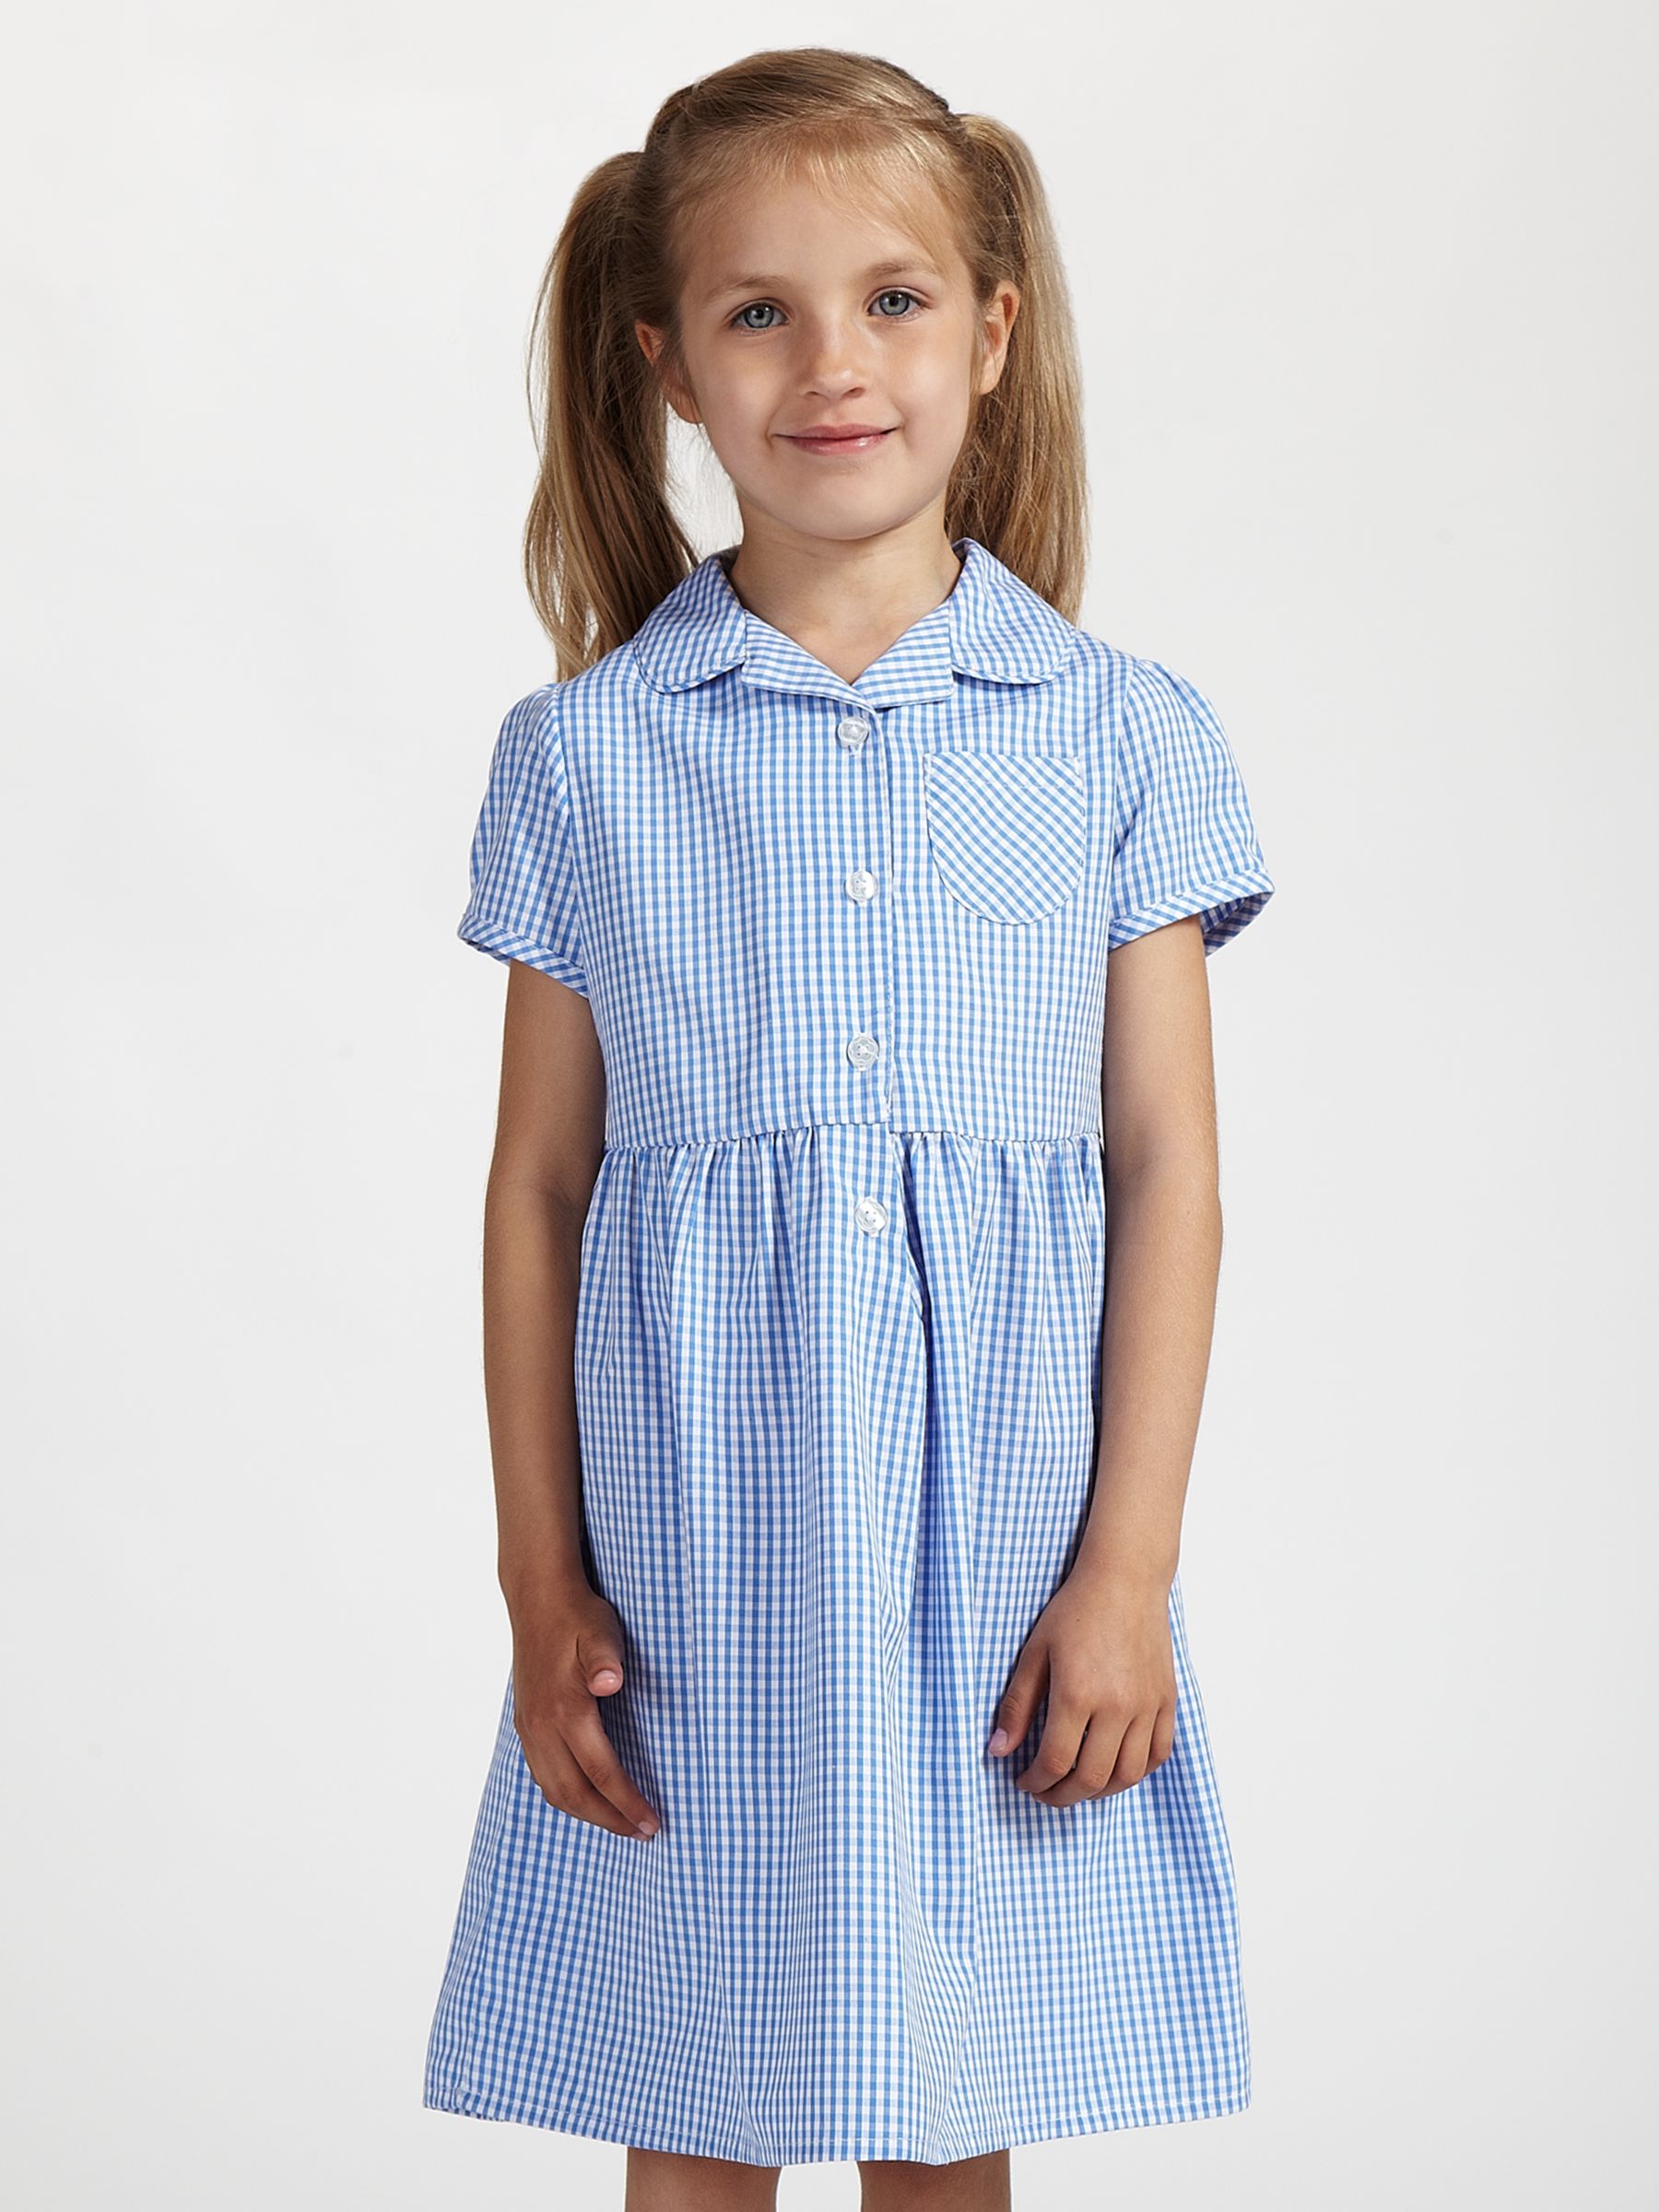 pale blue gingham school dress